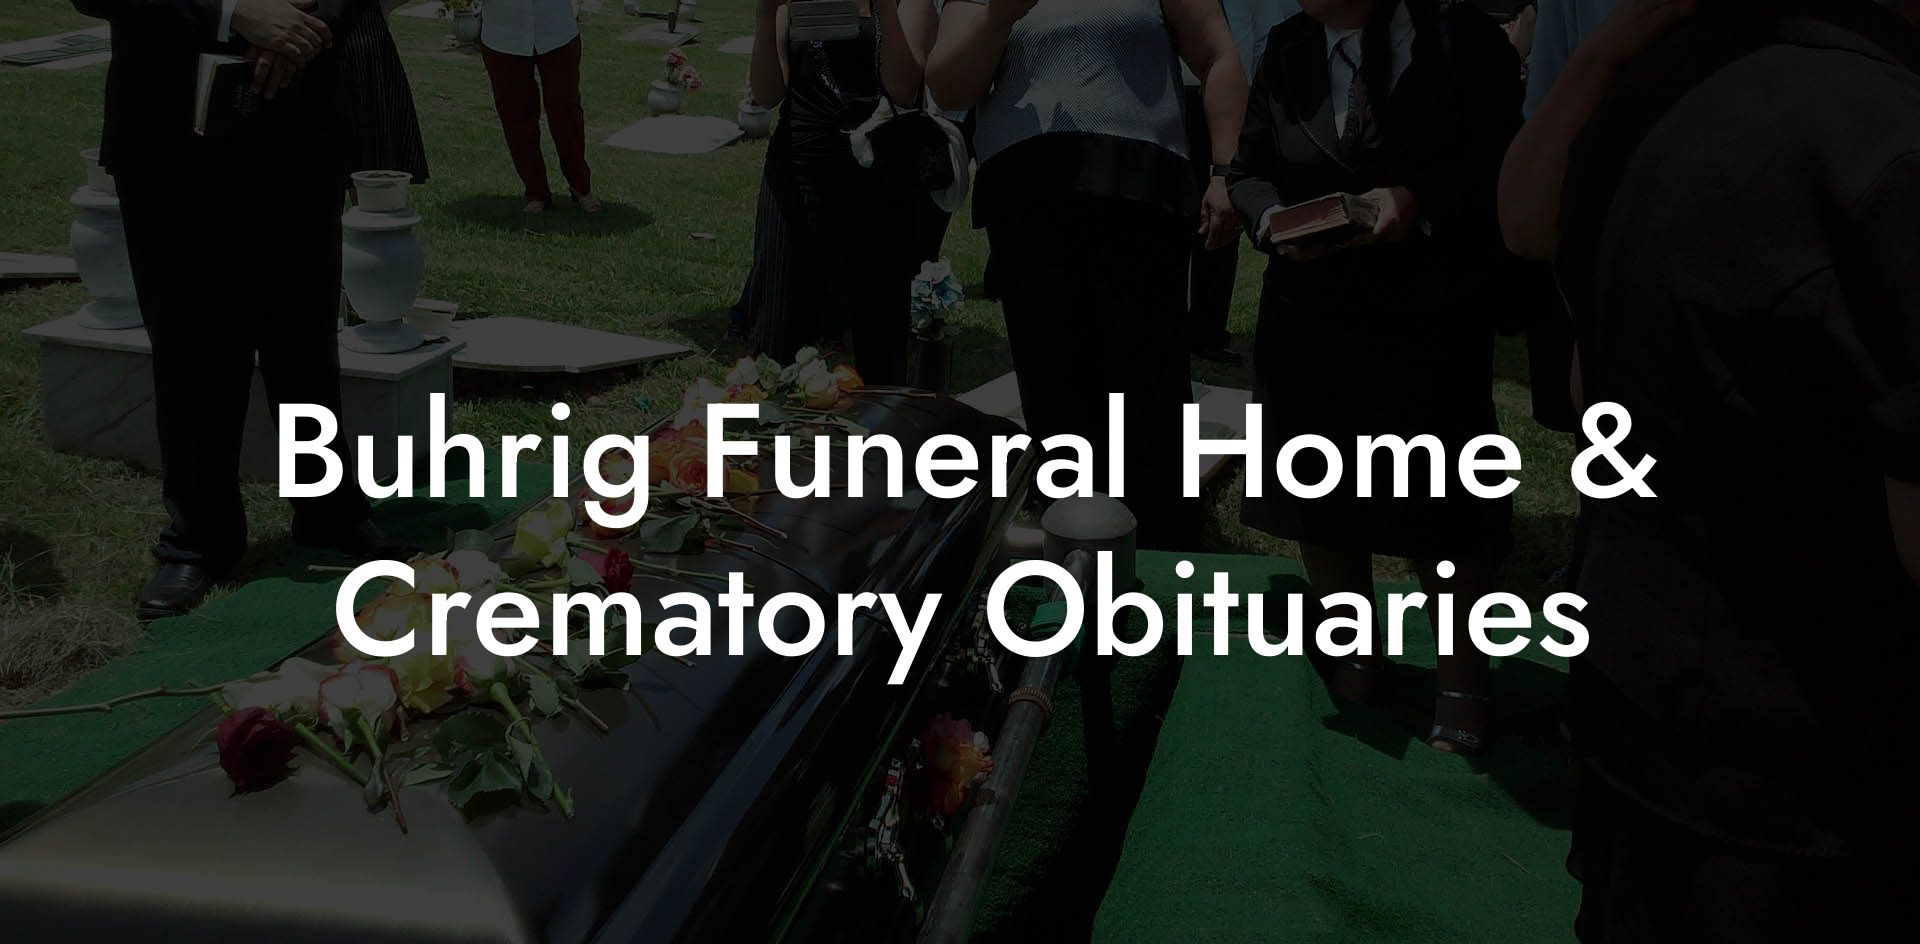 Buhrig Funeral Home & Crematory Obituaries